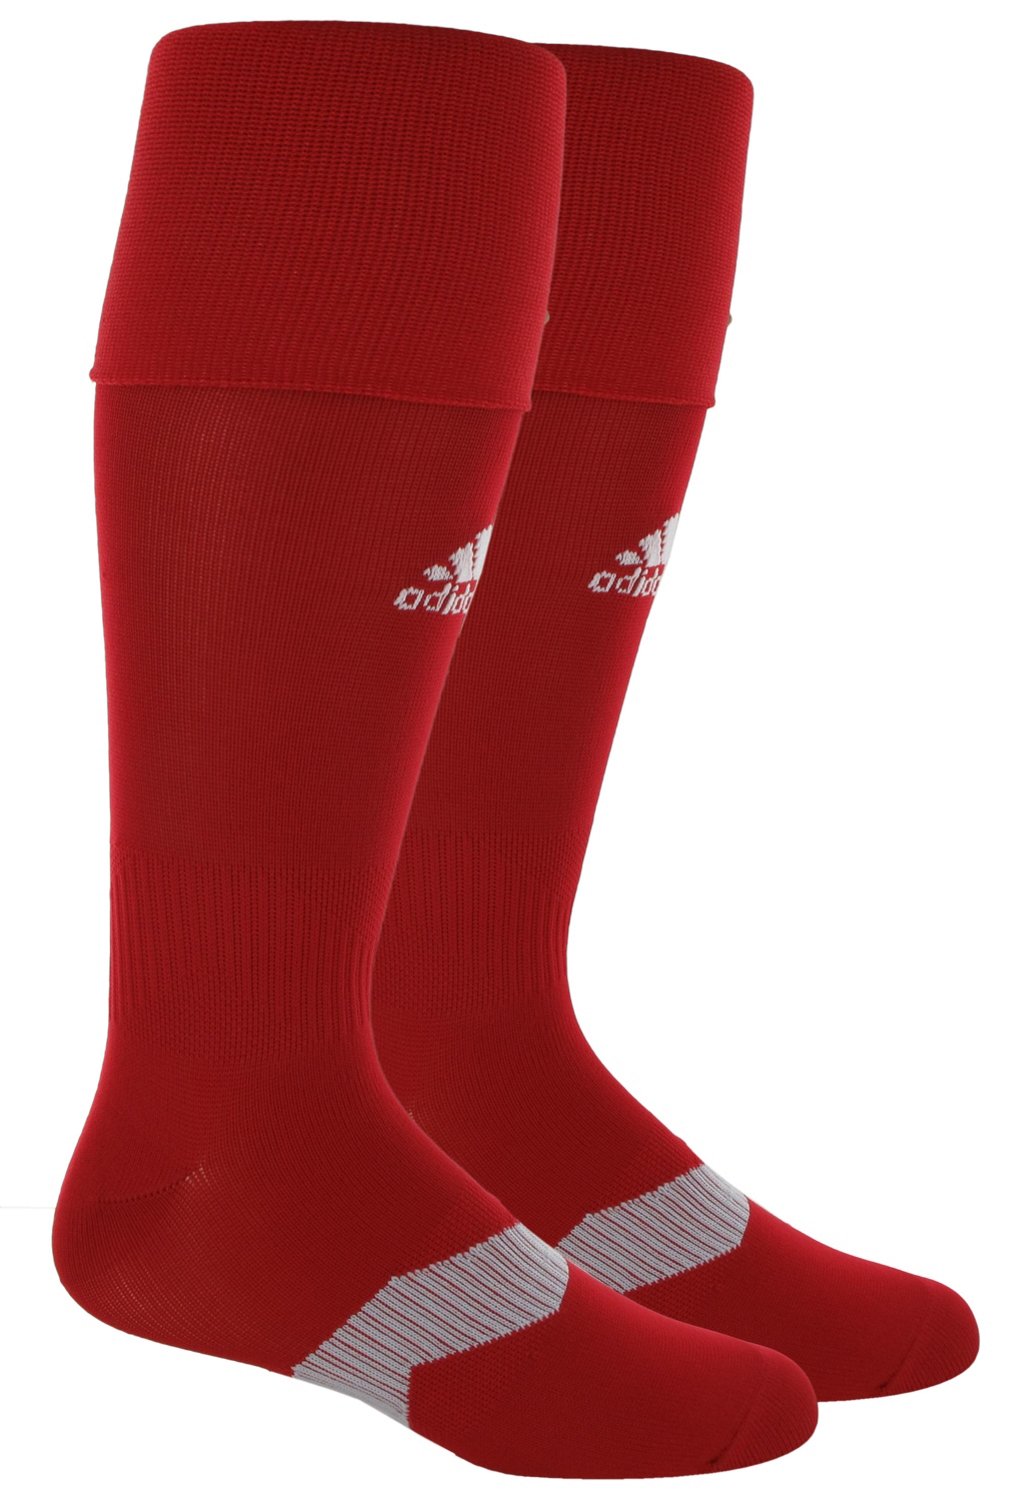 adidas Adults' Metro IV Over the Calf Soccer Socks | Academy